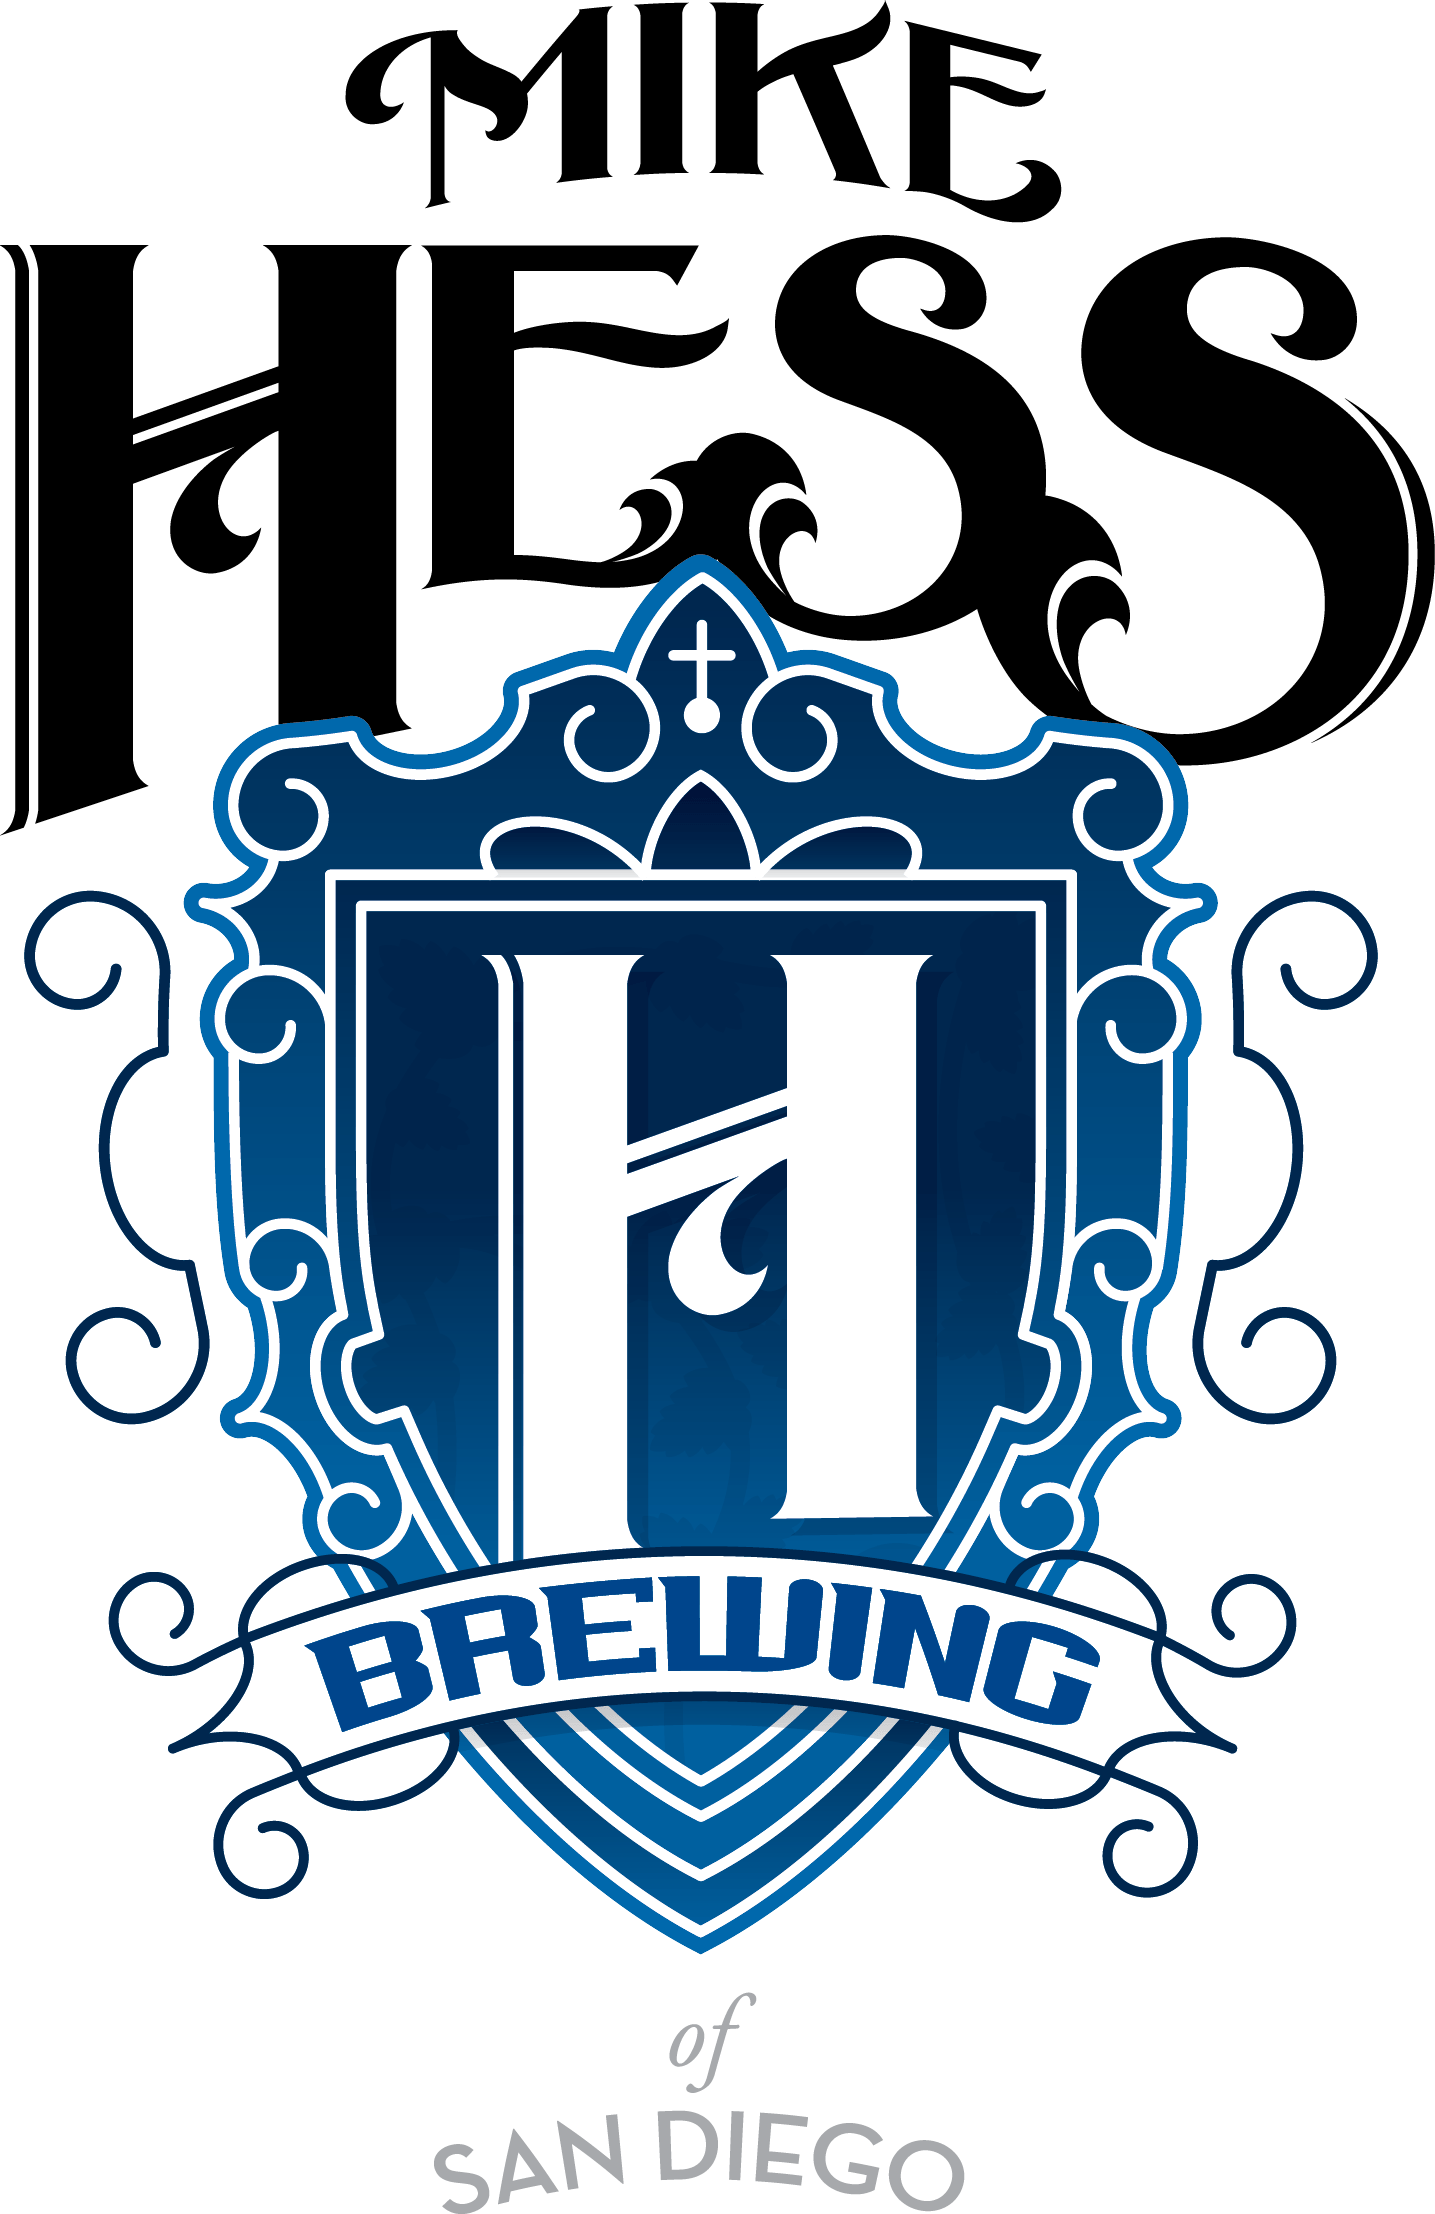 Hess Logo - Mike Hess Brewing